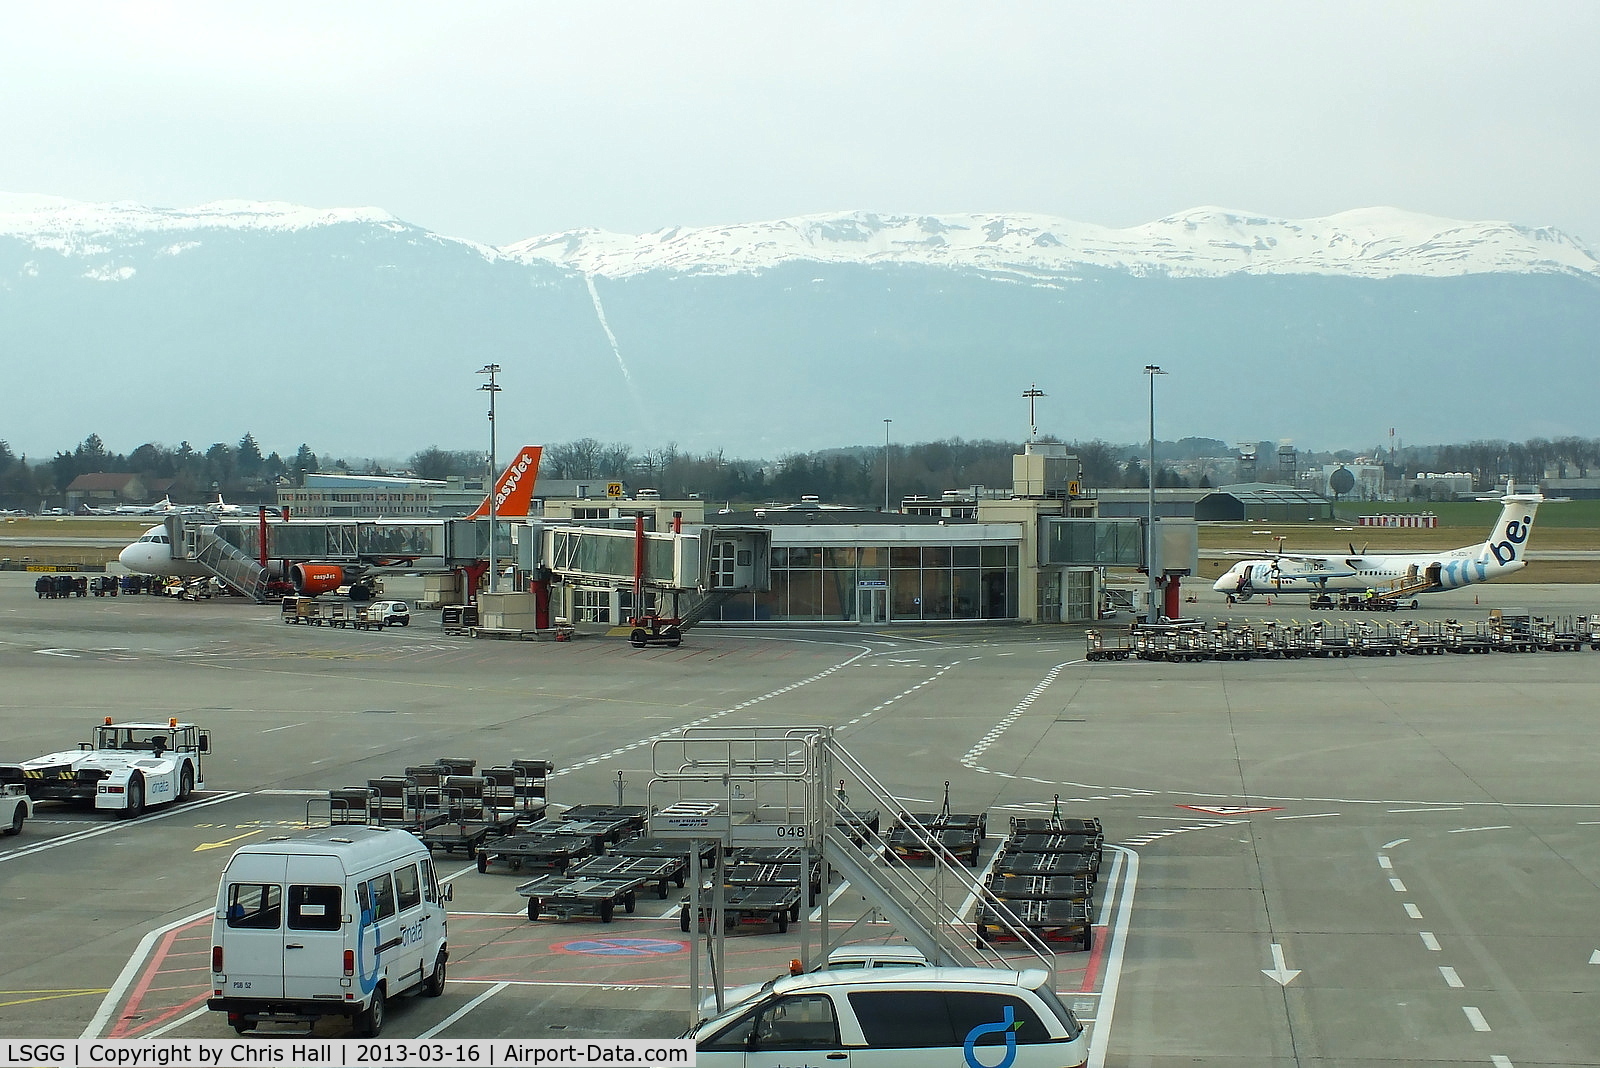 Geneva Cointrin International Airport, Geneva Switzerland (LSGG) - satallite gates at Geneva